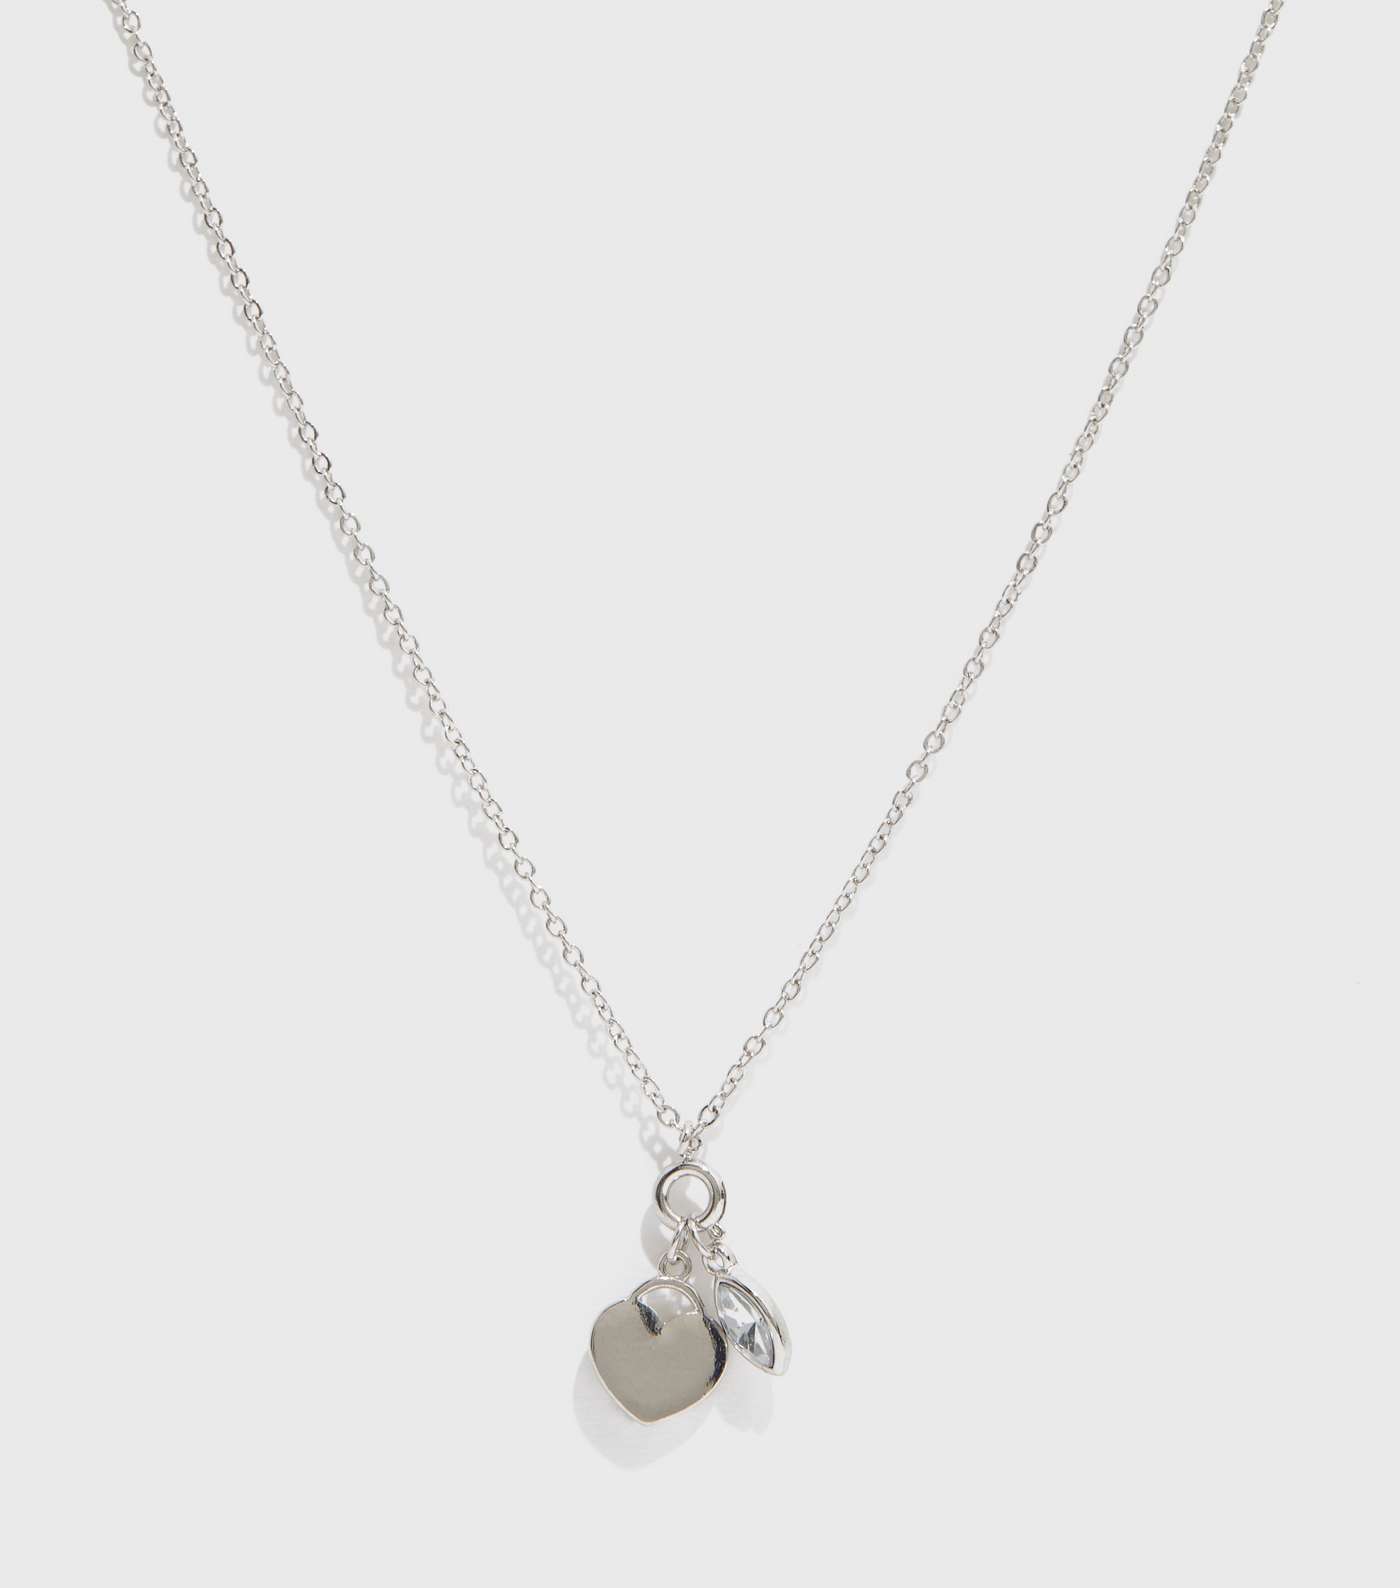 Silver Heart Pendant Chain Necklace